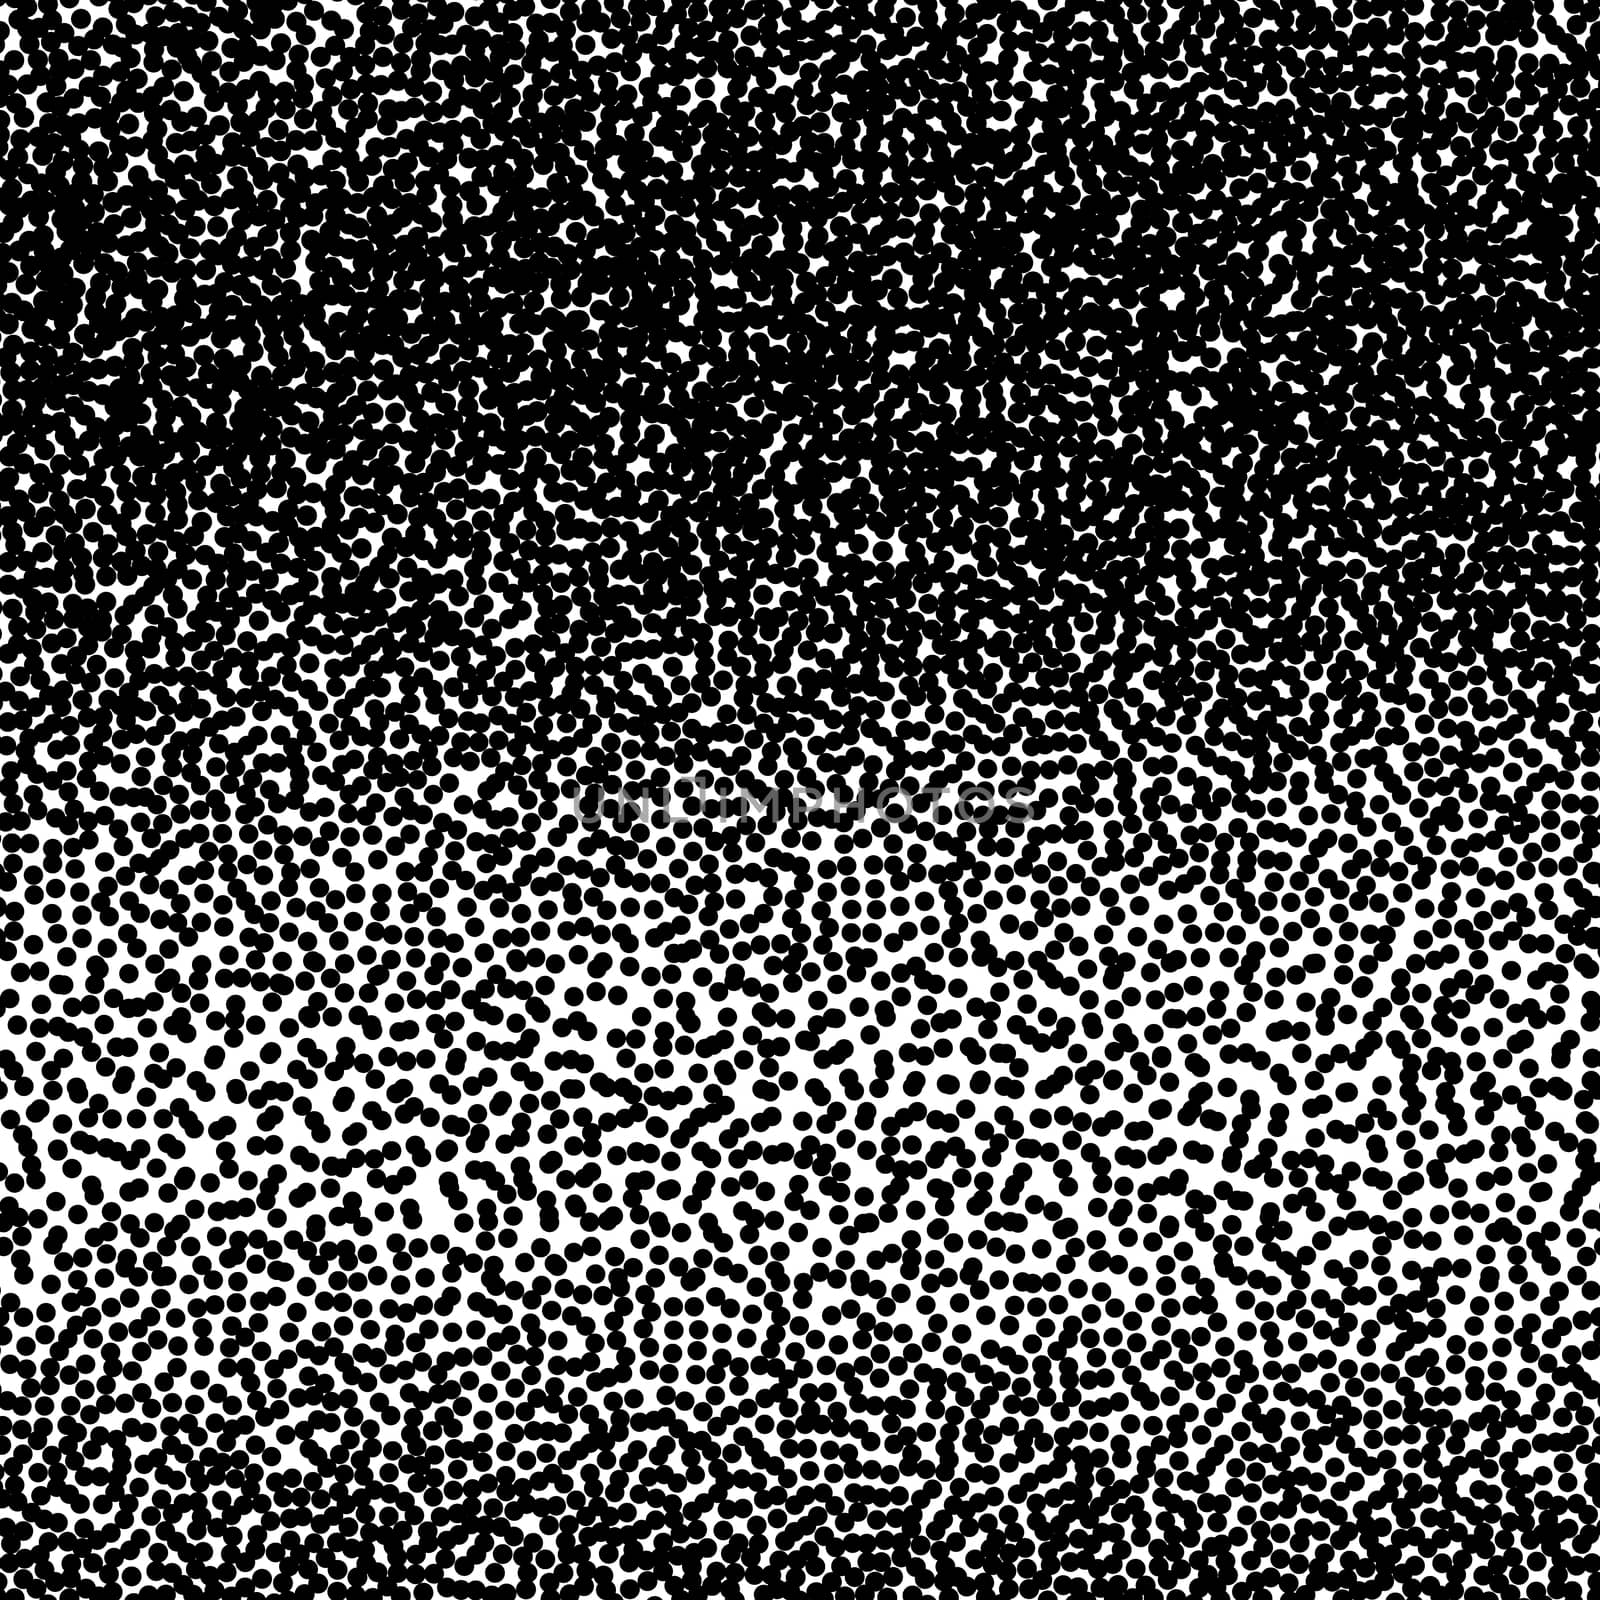  halftone dots pattern. Black dots on white background.